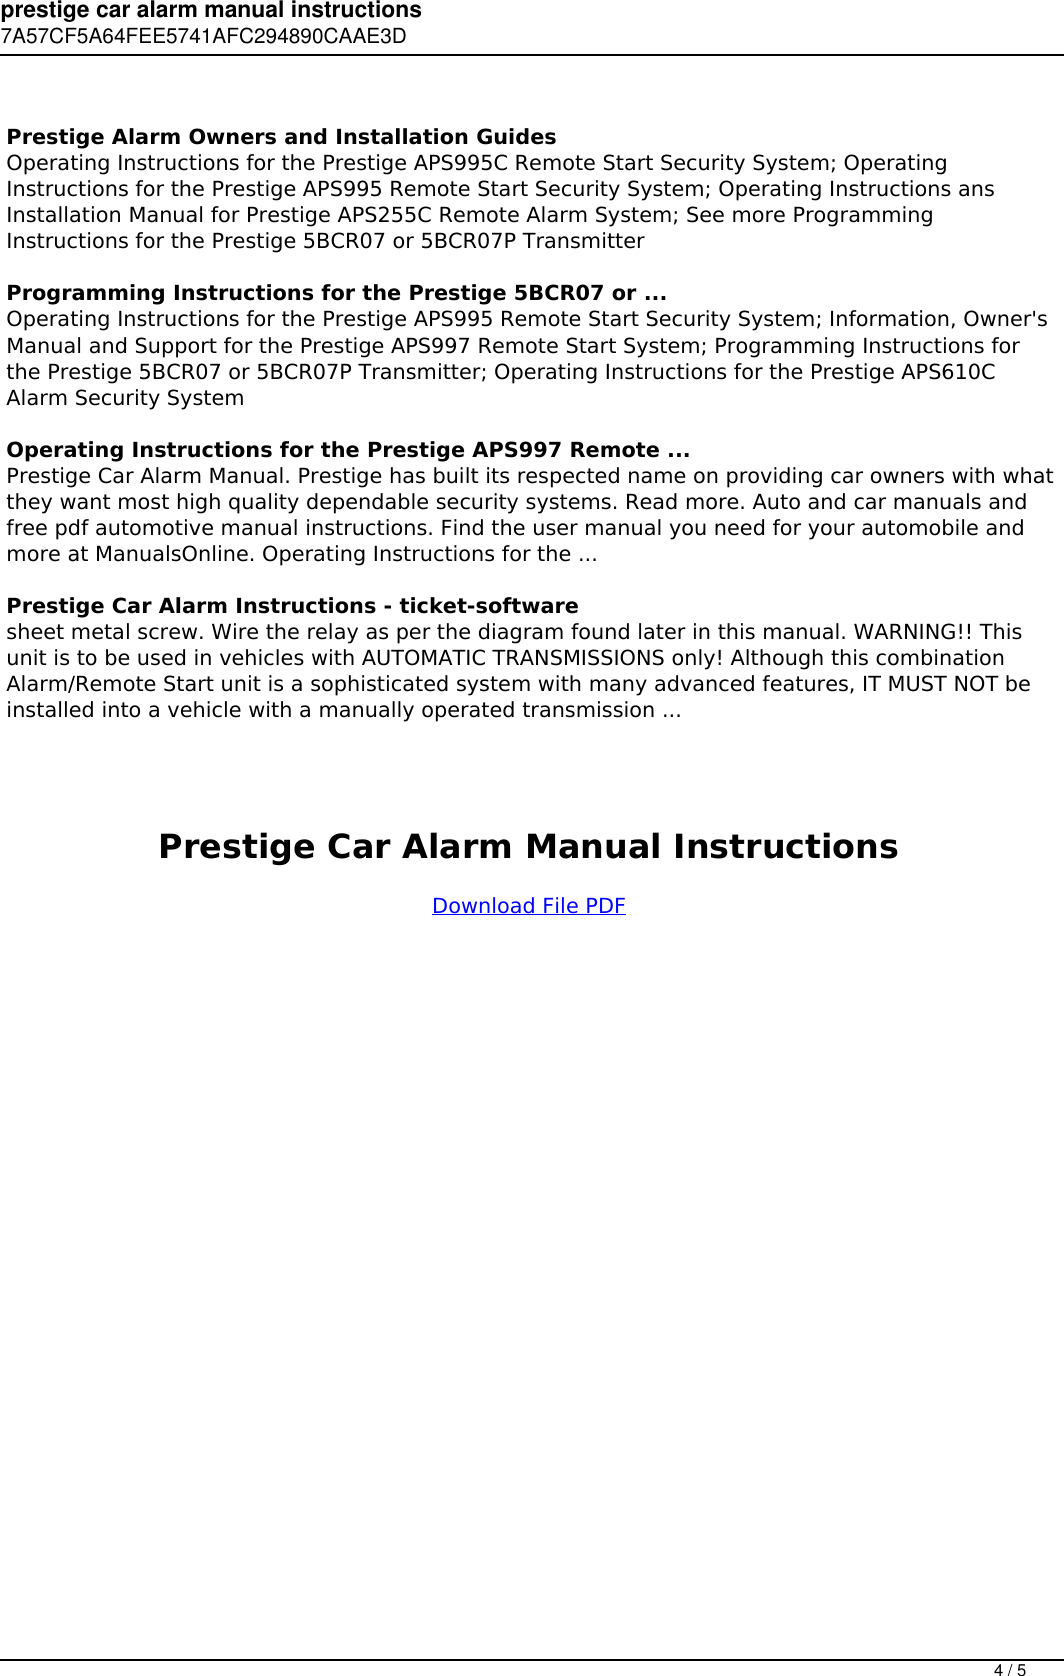 Page 4 of 5 - Prestige Car Alarm Manual Instructions